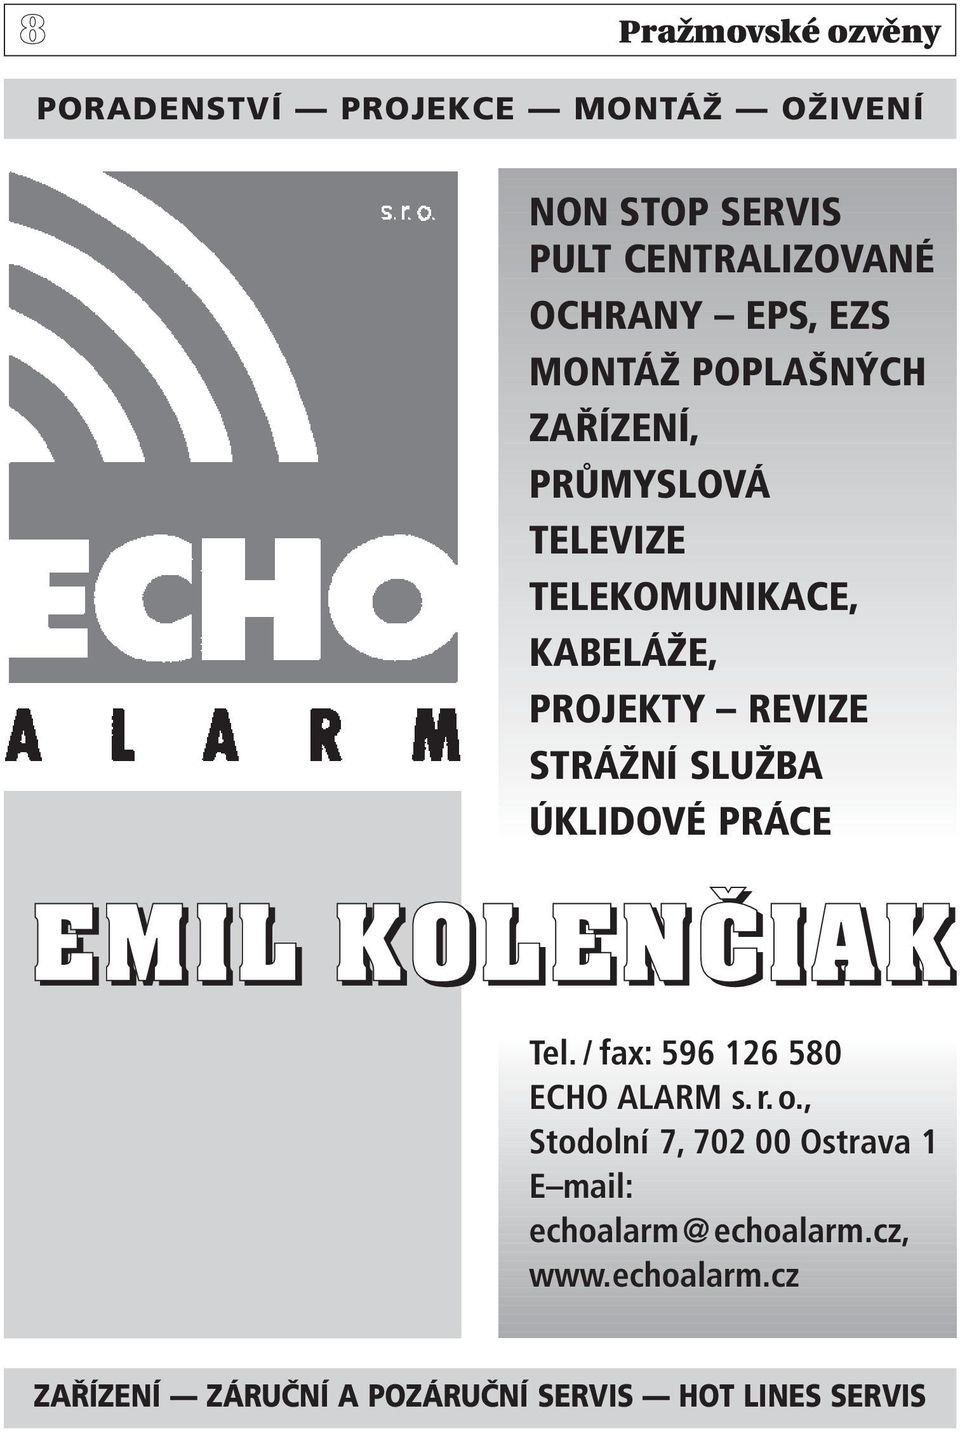 SLUŽBA ÚKLIDOVÉ PRÁCE EMIL KOLENâIAK Tel. / fax: 596 126 580 ECHO ALARM s.r.o.